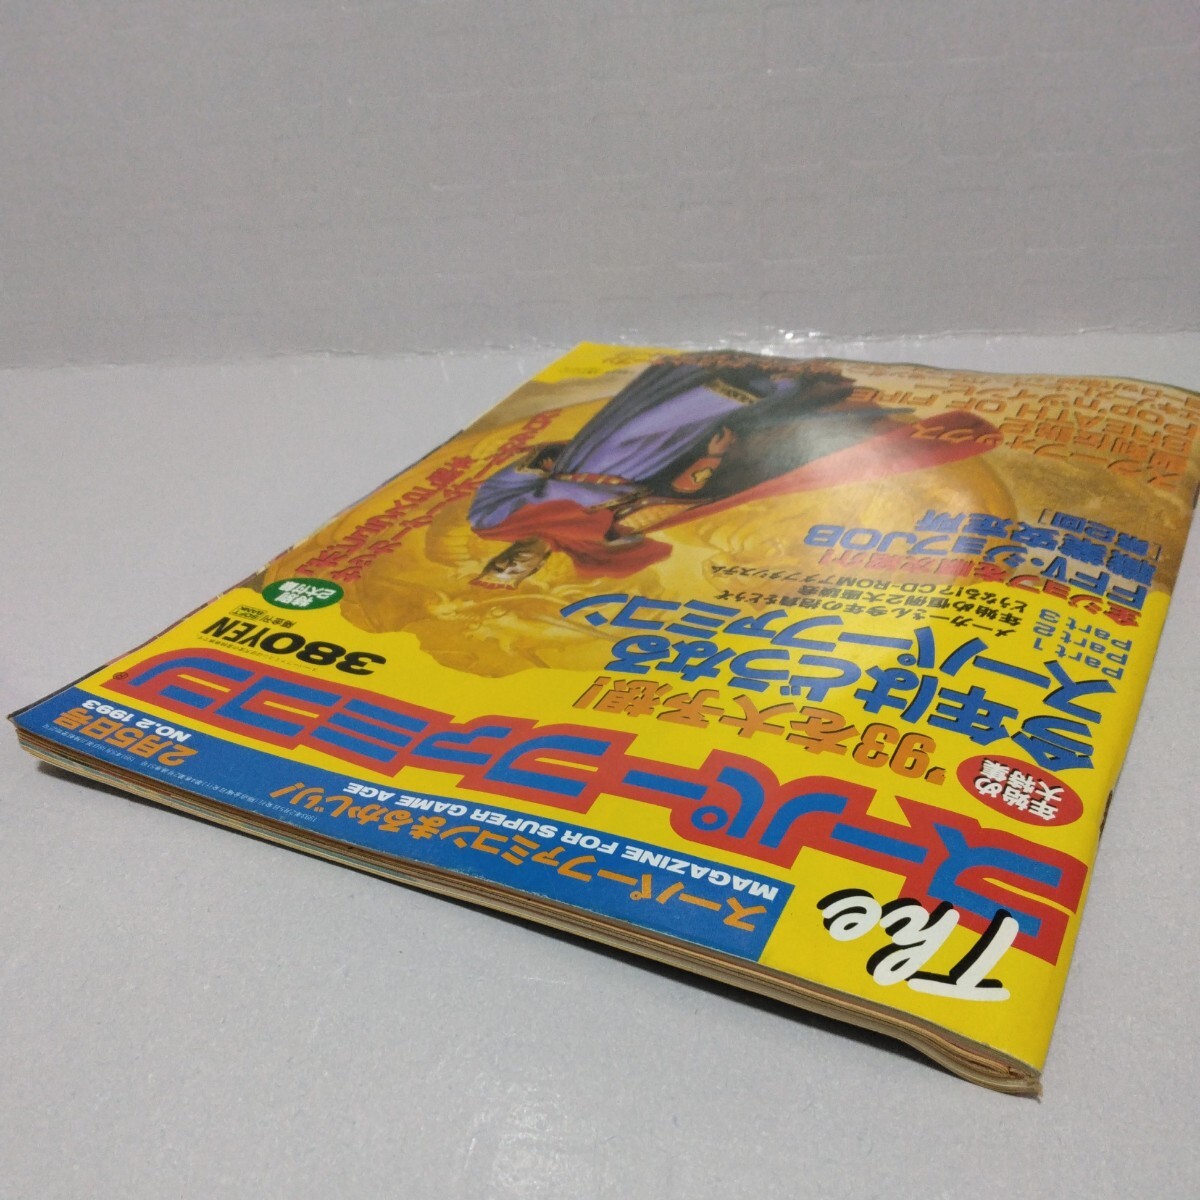 Theスーパーファミコン 1993年2月5日号 NO.2 付録無し_画像3